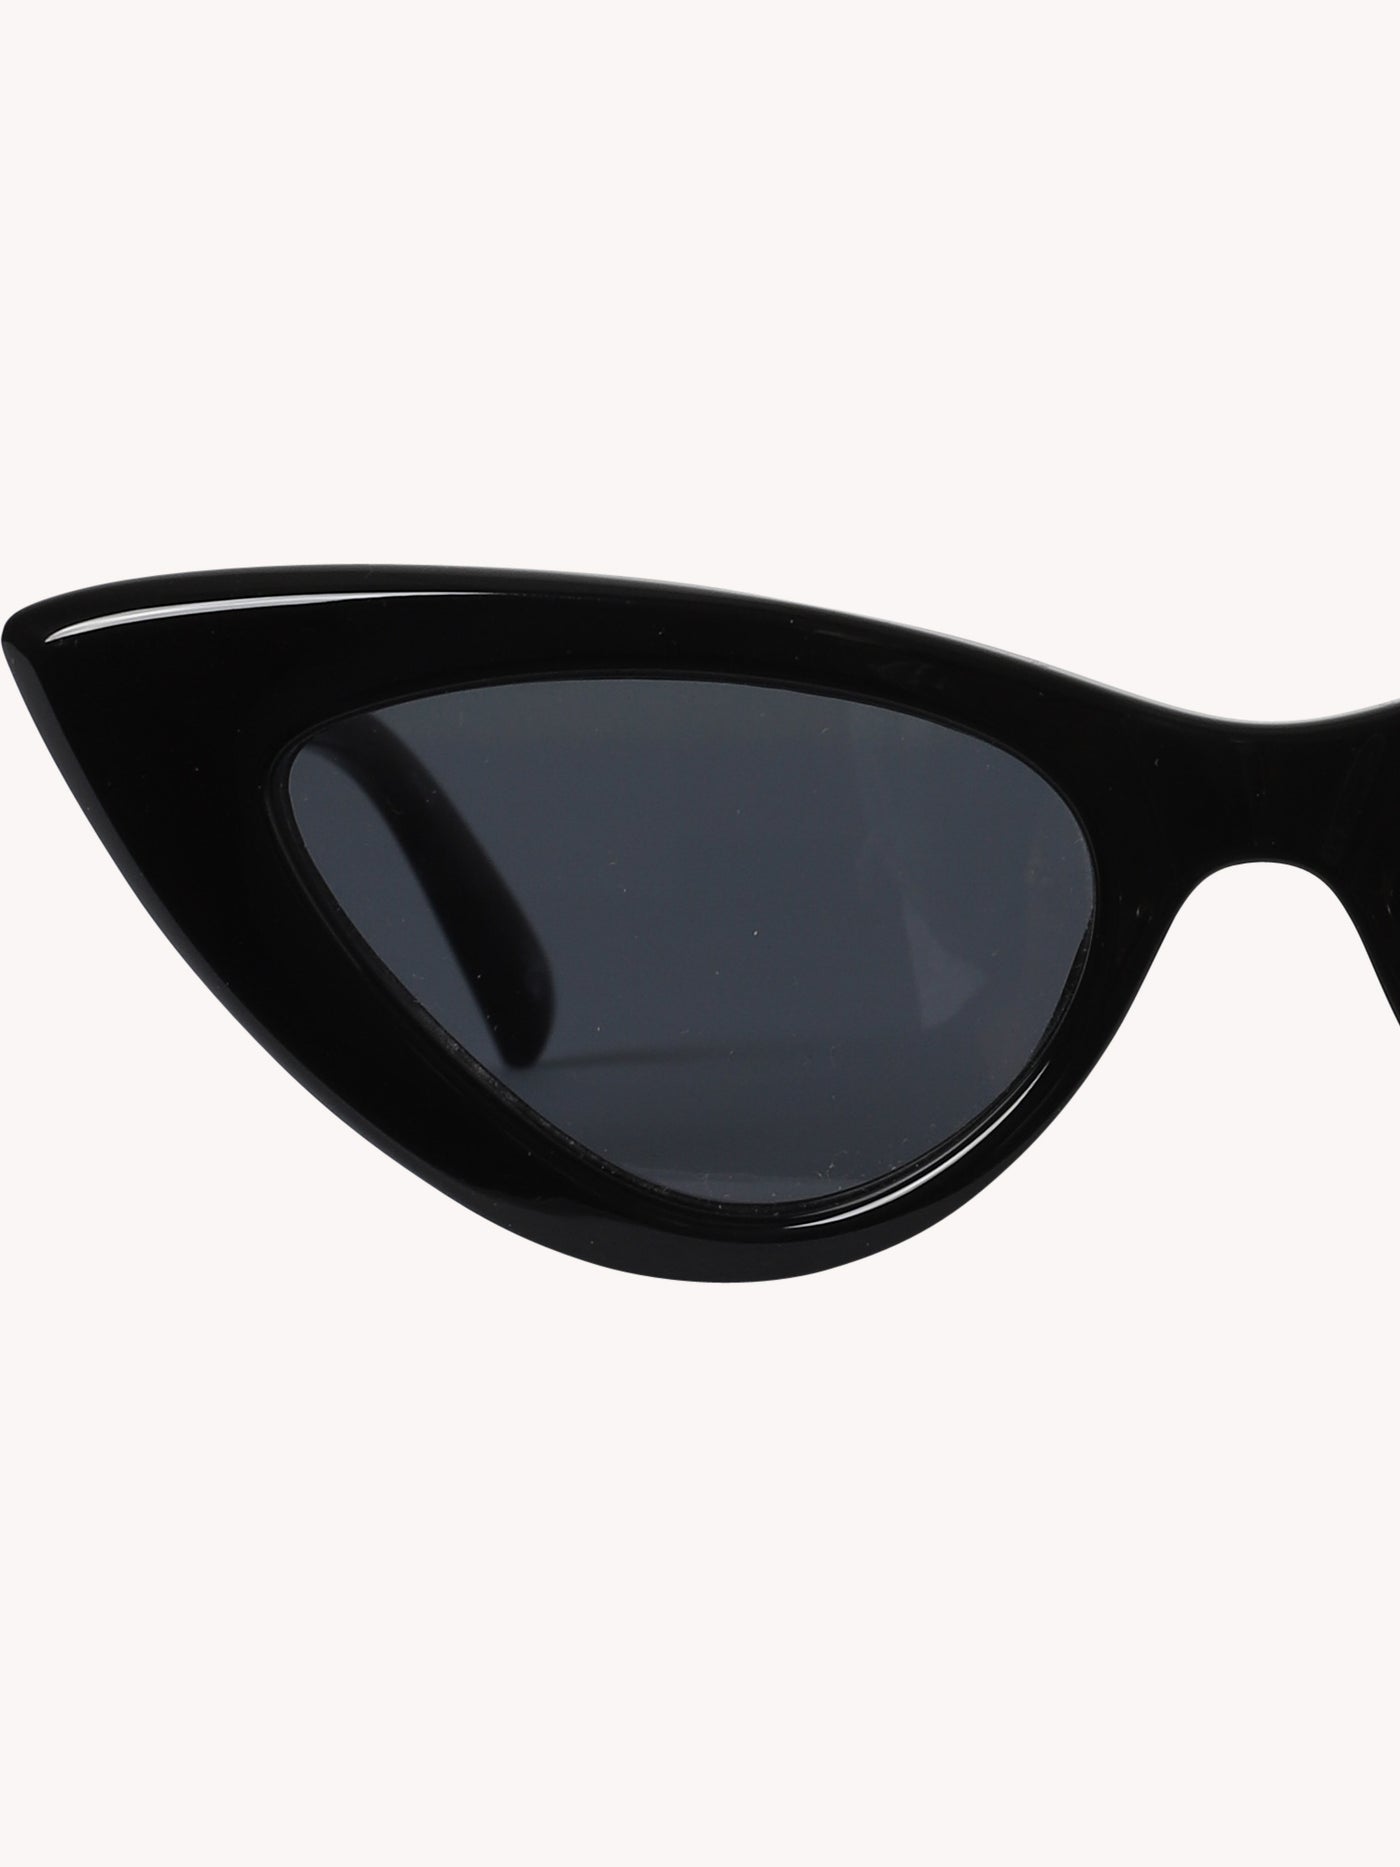 Hypnosis Sunglasses in Black